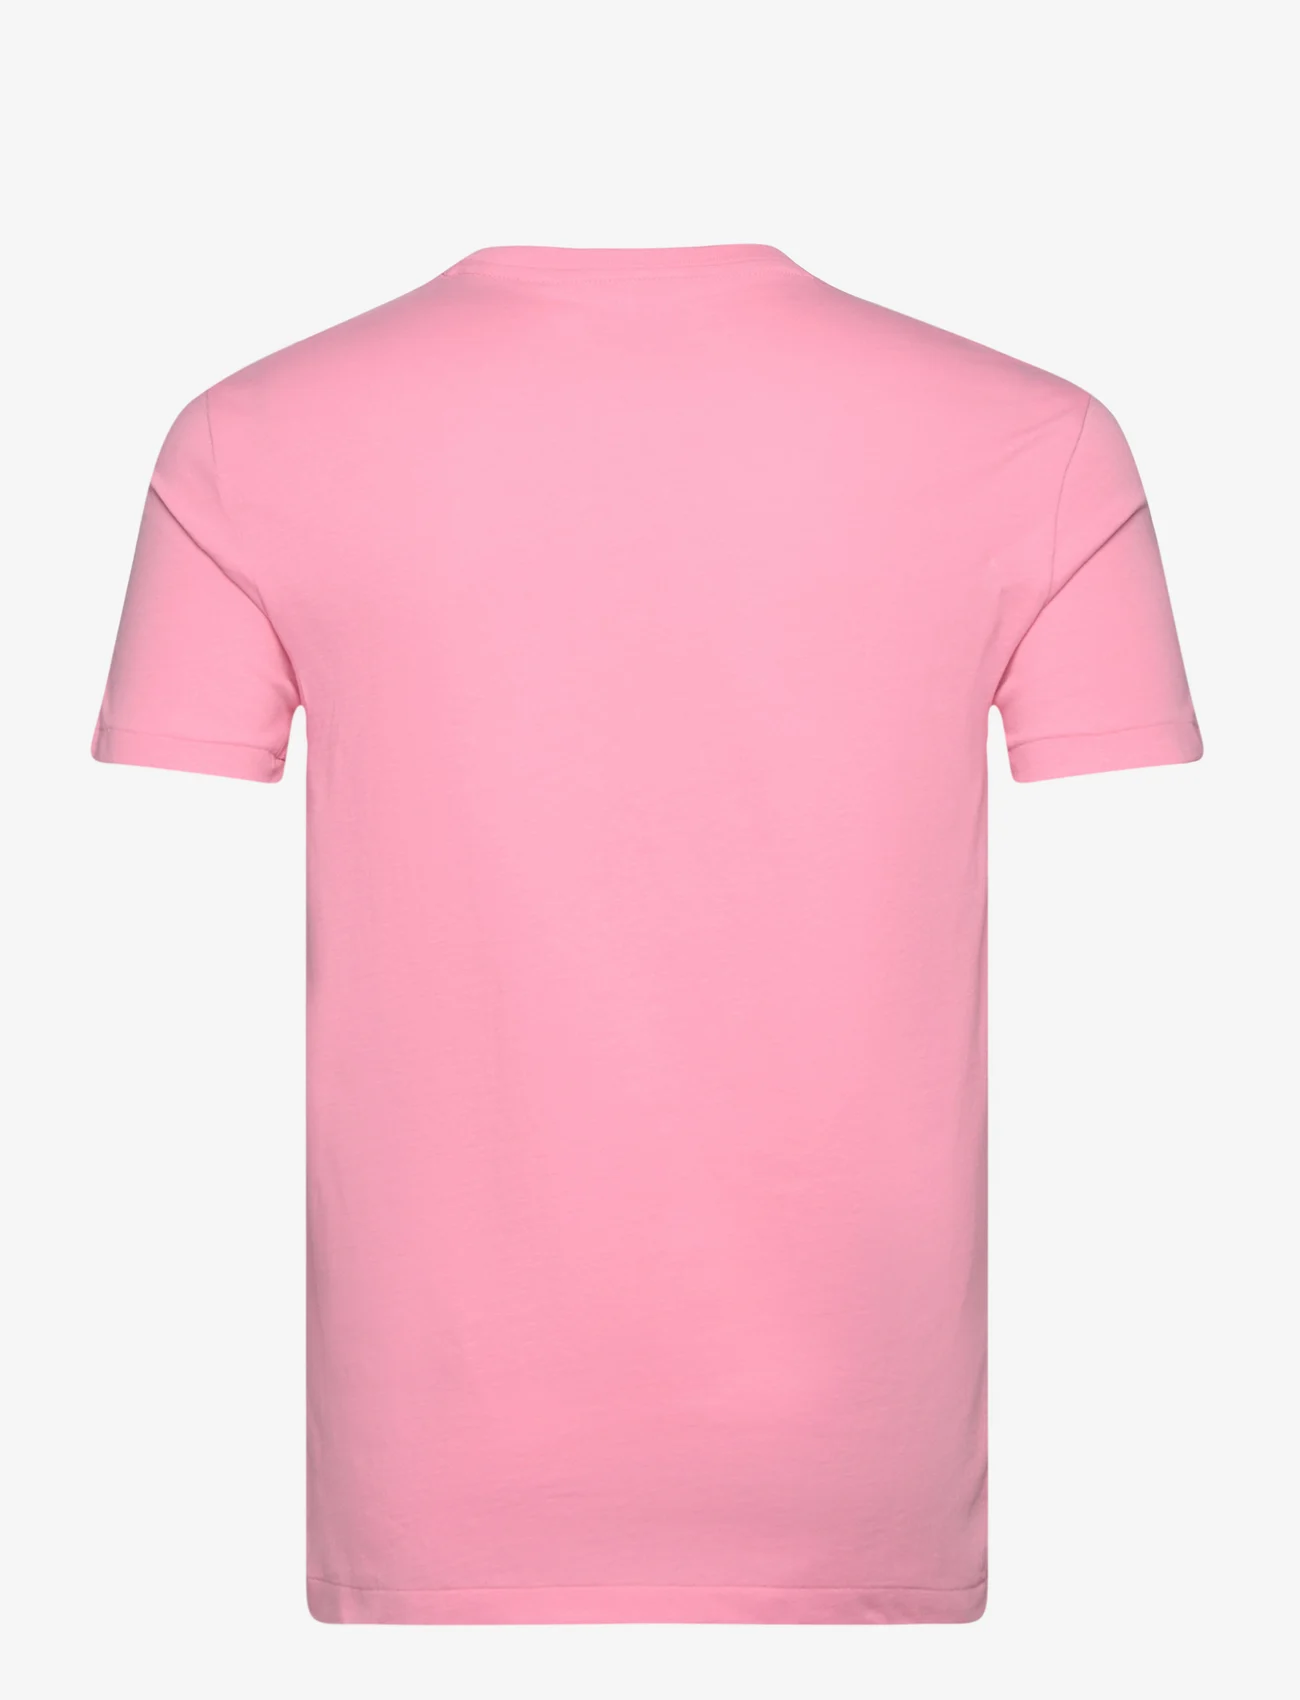 Polo Ralph Lauren - Custom Slim Fit Jersey Crewneck T-Shirt - laisvalaikio marškinėliai - course pink/c7532 - 1